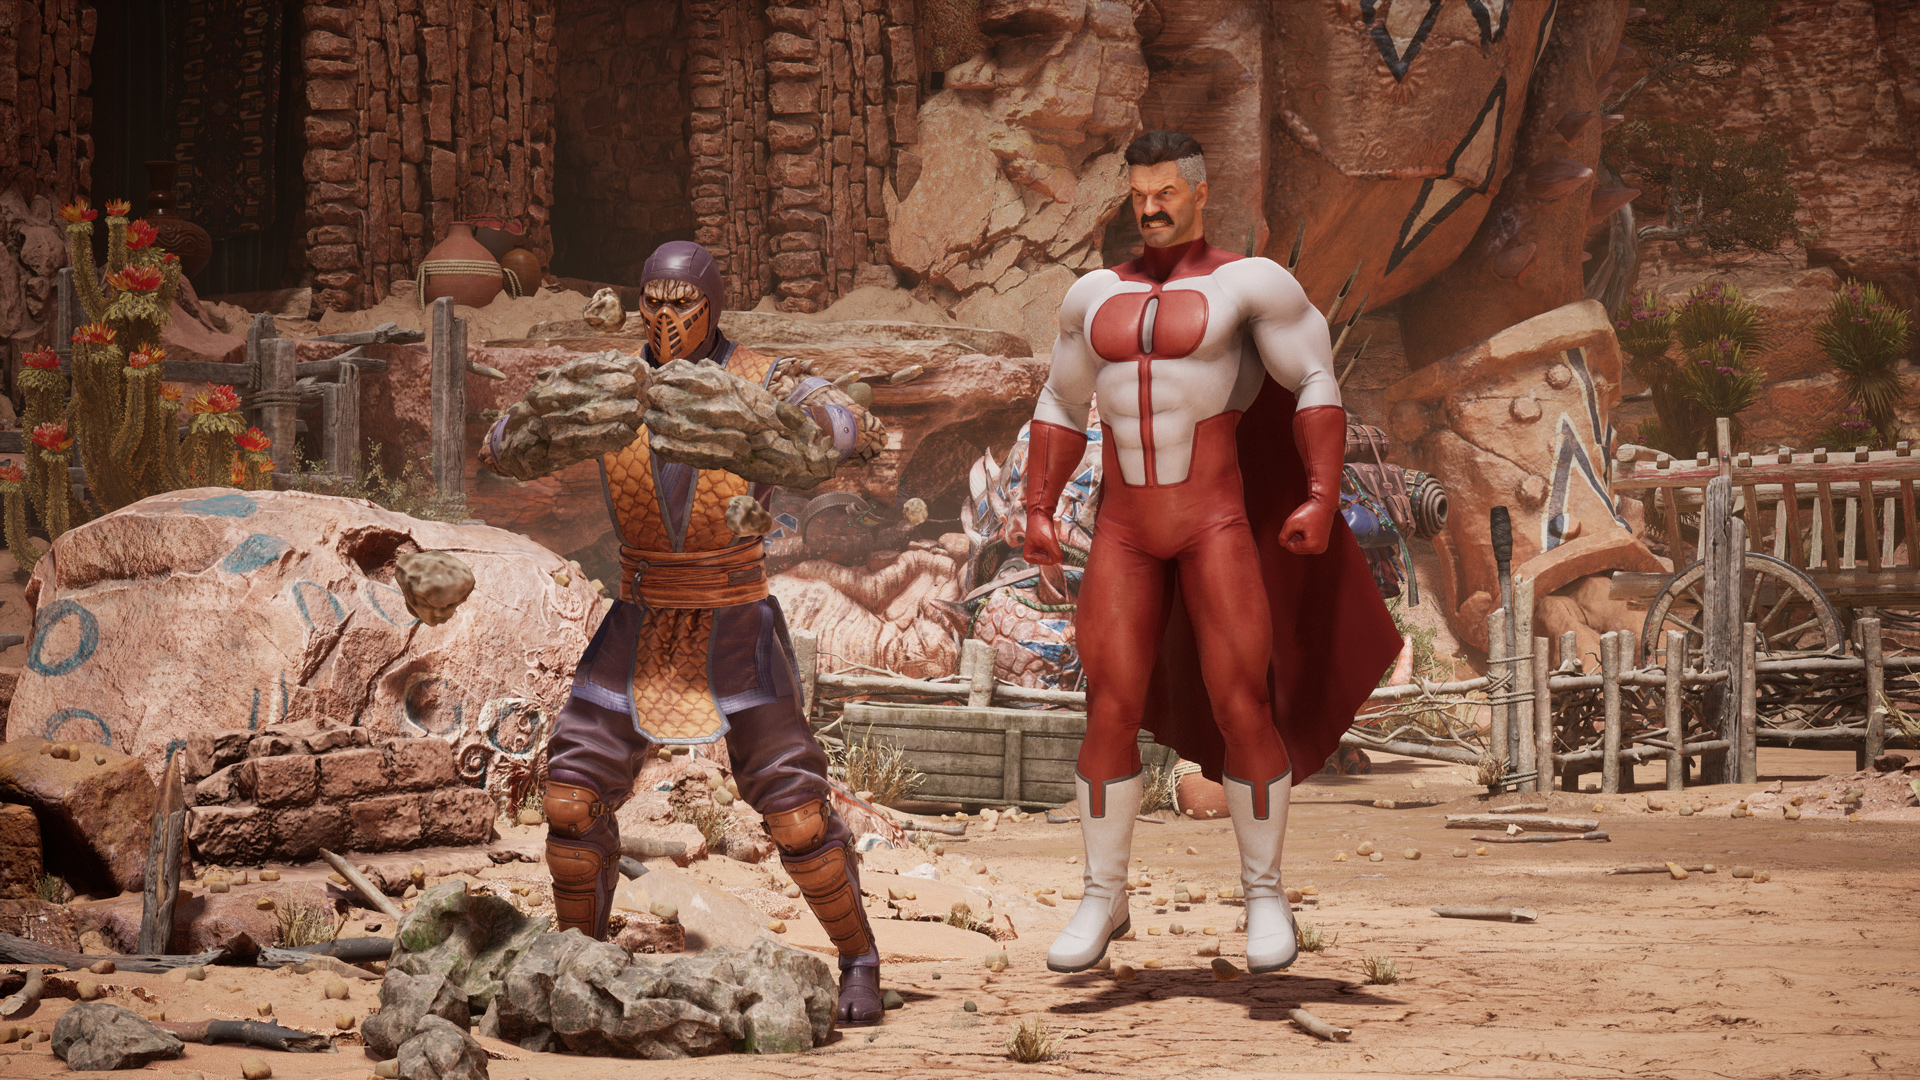 Omni-Man Mortal Kombat 1 Release Date Confirmed Via Xbox Store